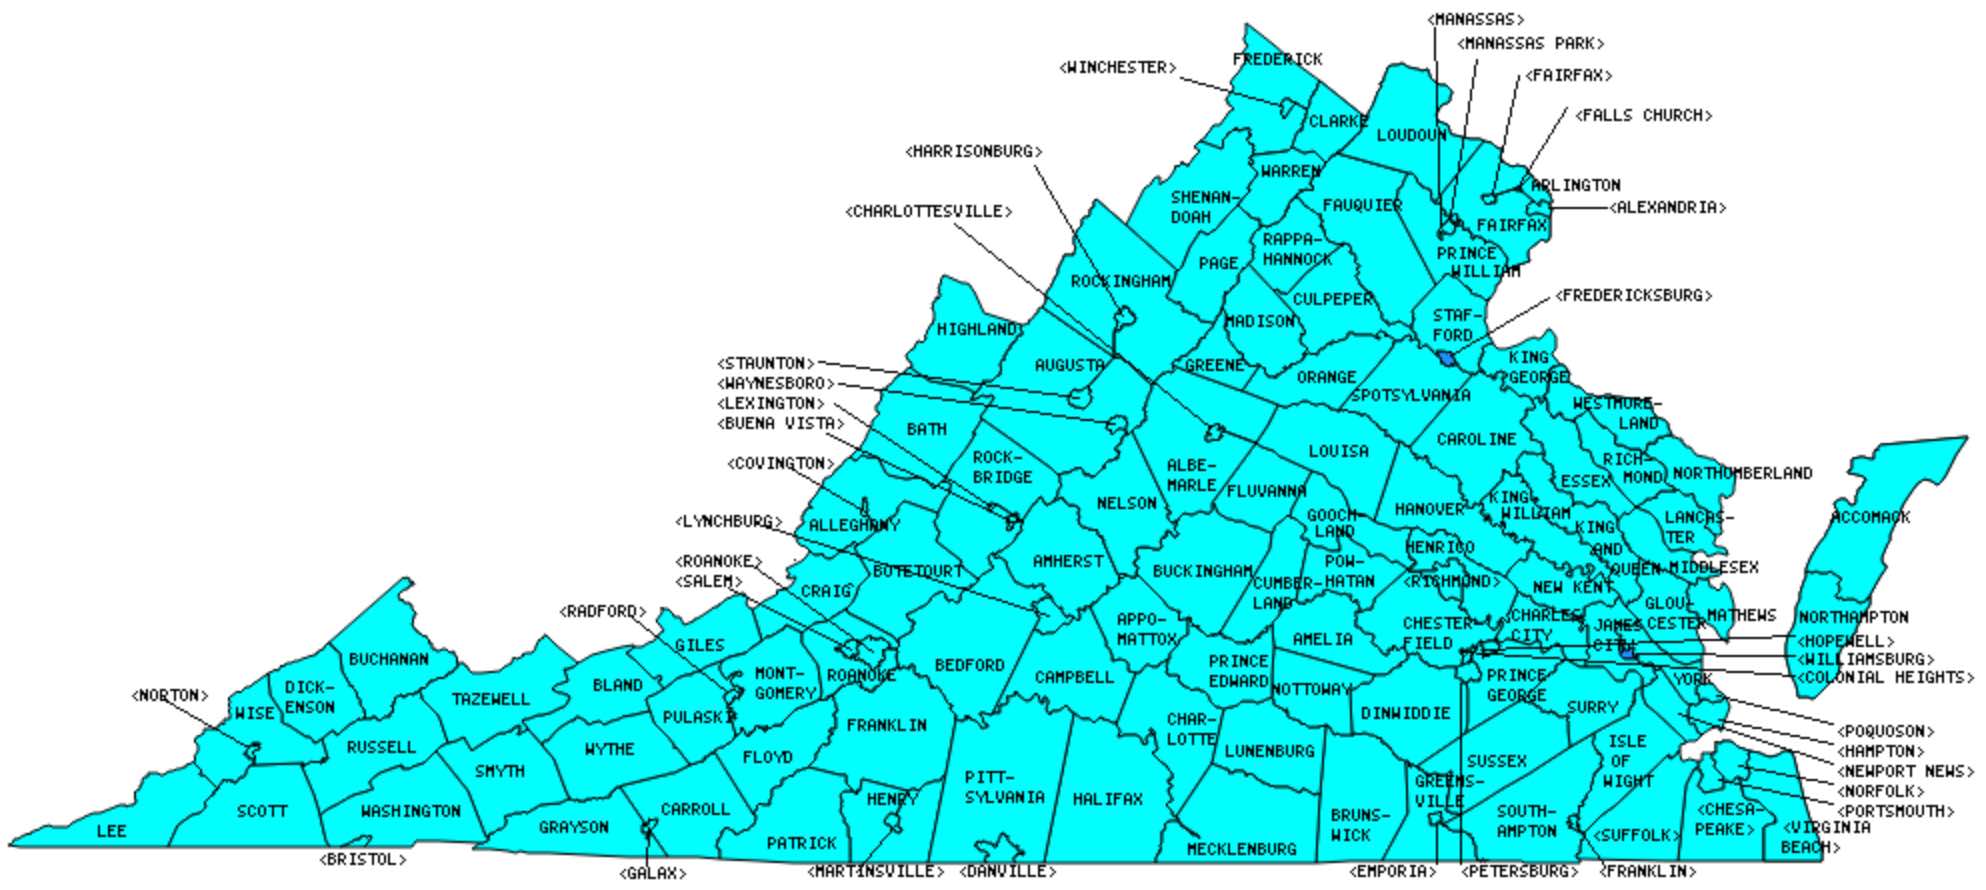 Virginia Counties Visited